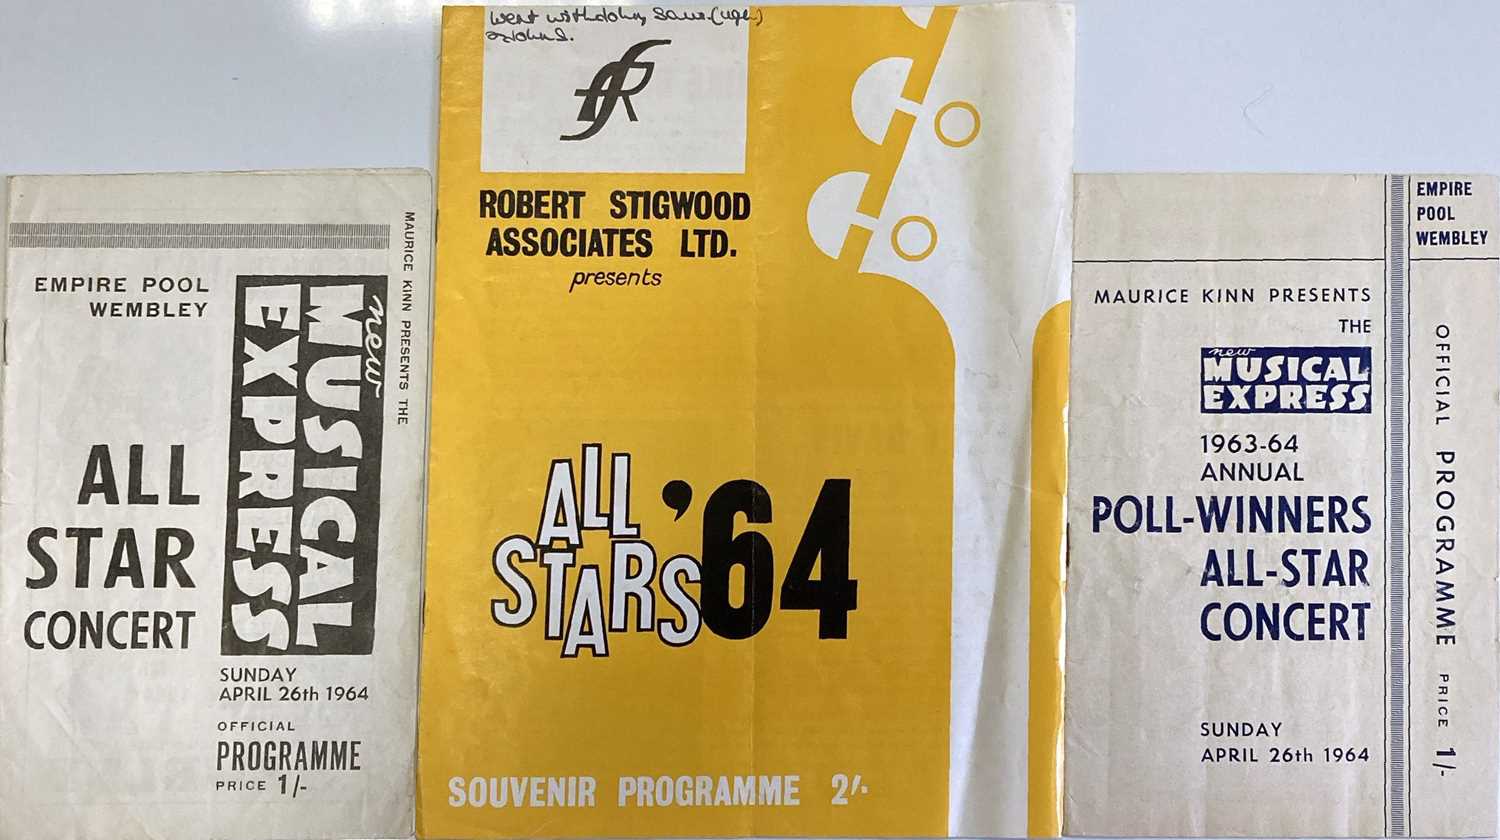 Lot 576 - ROLLING STONES / BEATLES PROGRAMMES - 1964.